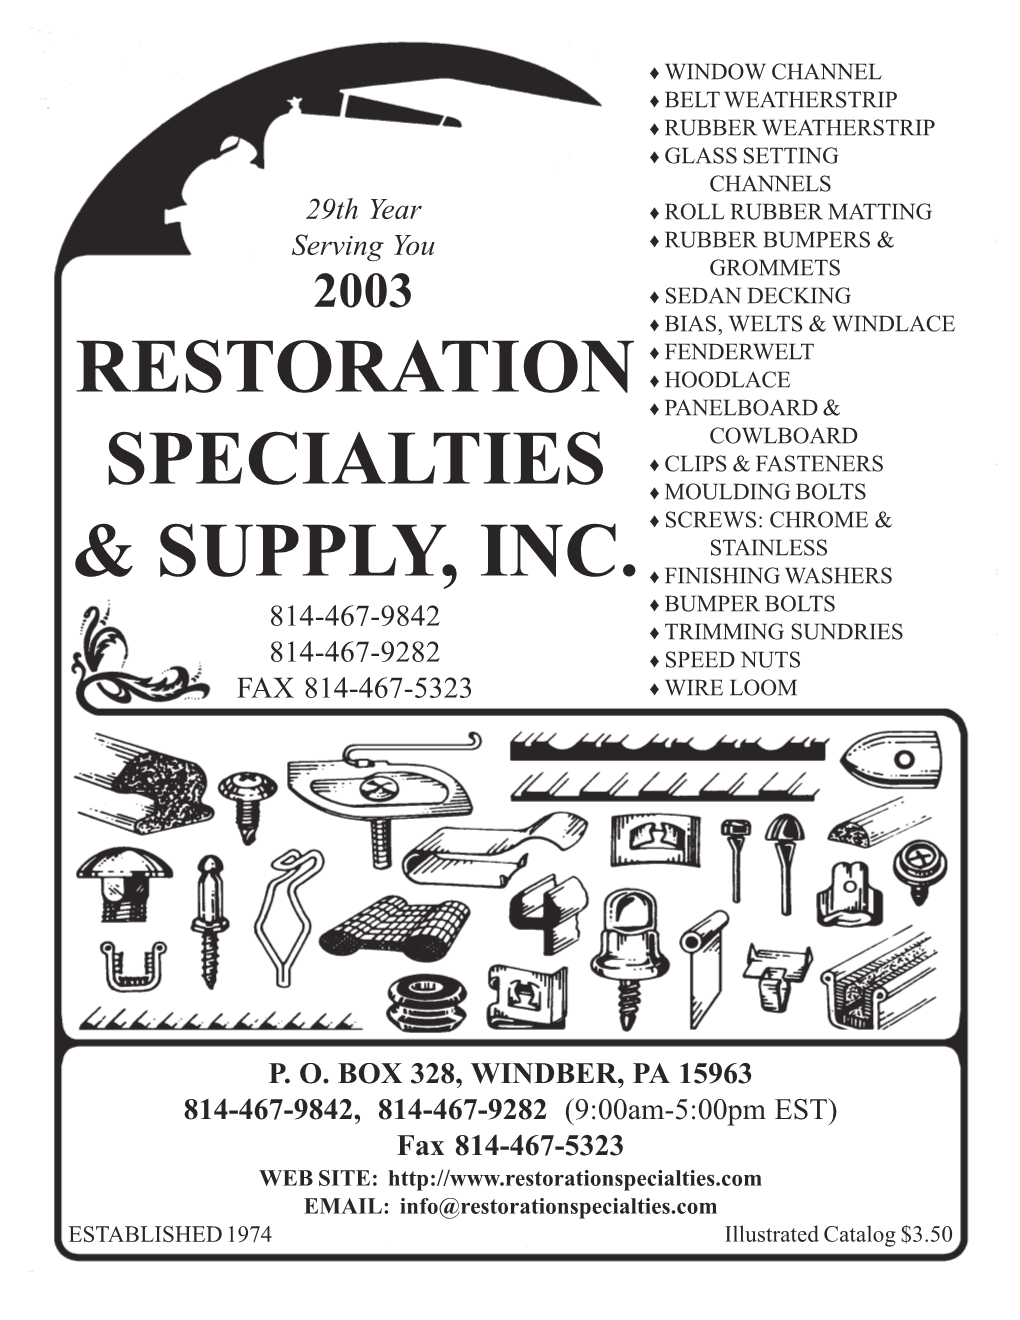 Restoration Specialties & Supply, Inc